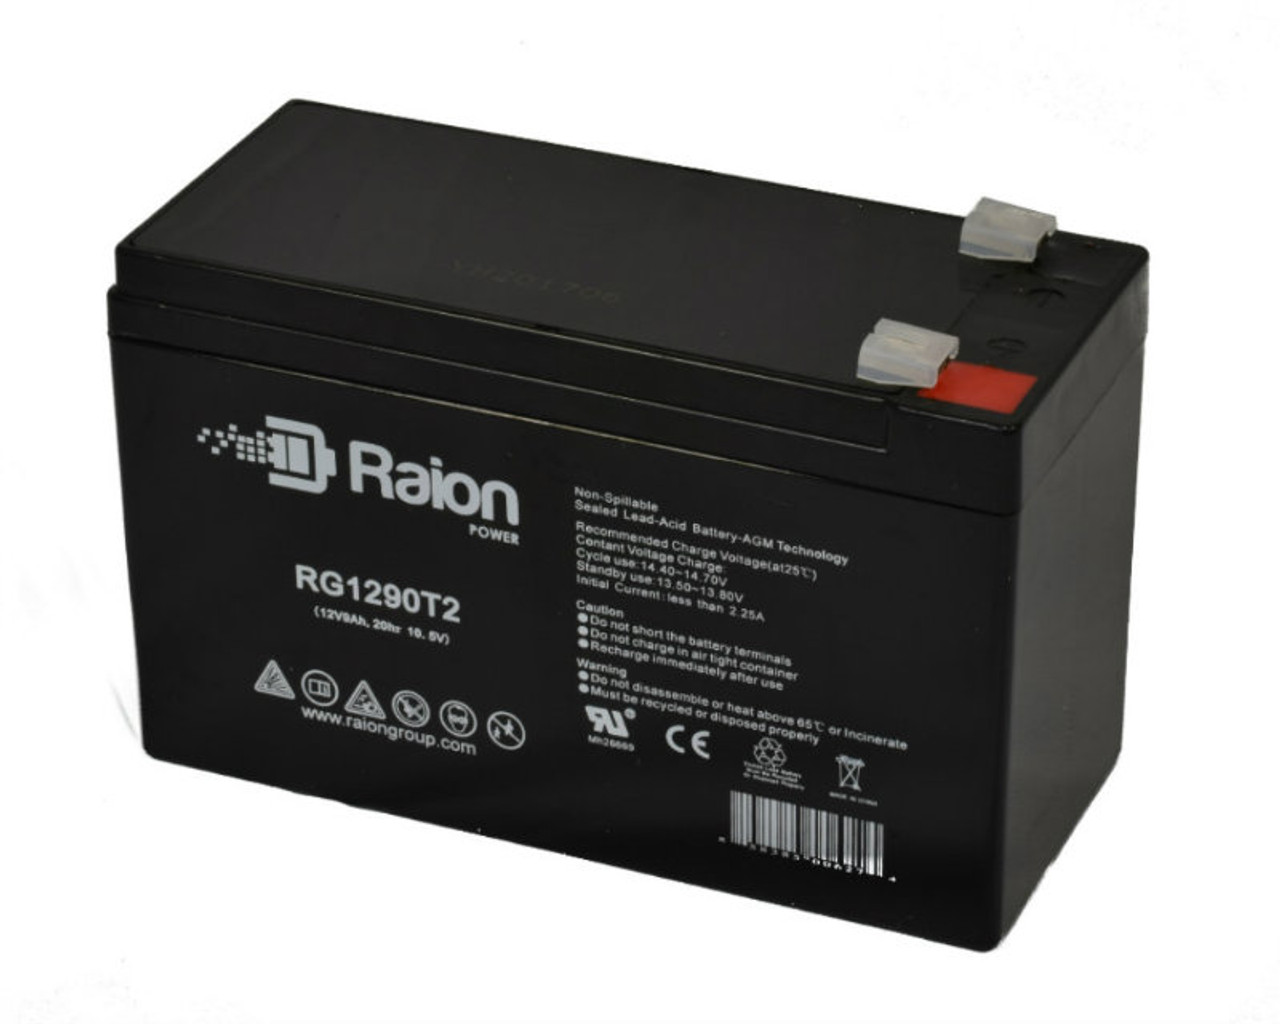 Raion Power RG1290T2 12V 9Ah AGM Battery for Upsonic CXR 1500